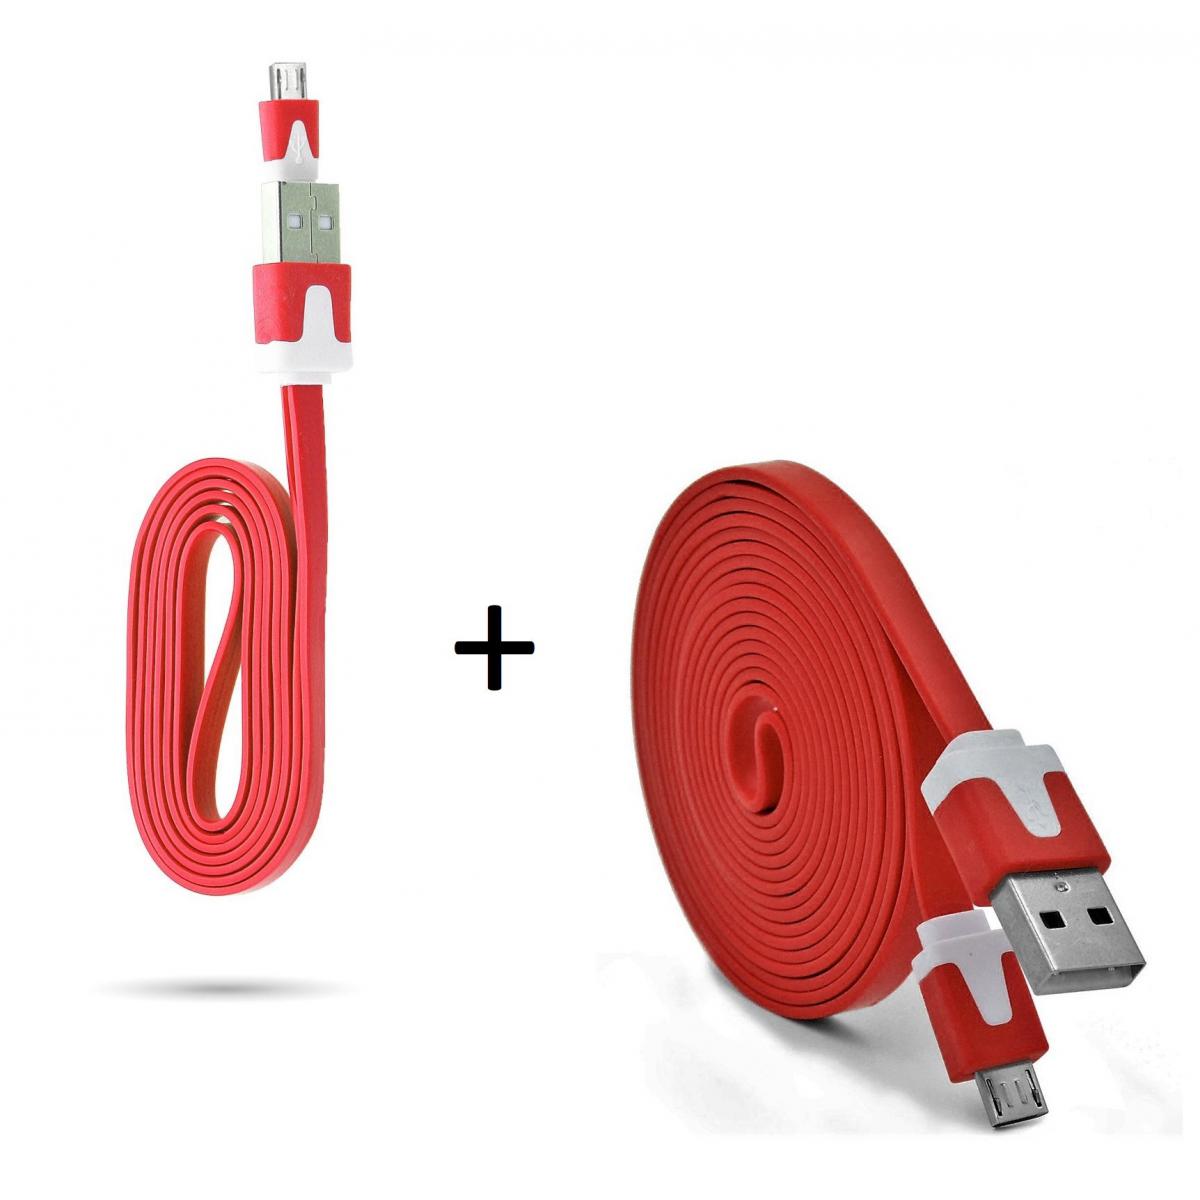 Shot - Pack Chargeur pour GIONEE F9 Smartphone Micro USB (Cable Noodle 3m + Cable Noodle 1m) Android (ROUGE) - Chargeur secteur téléphone